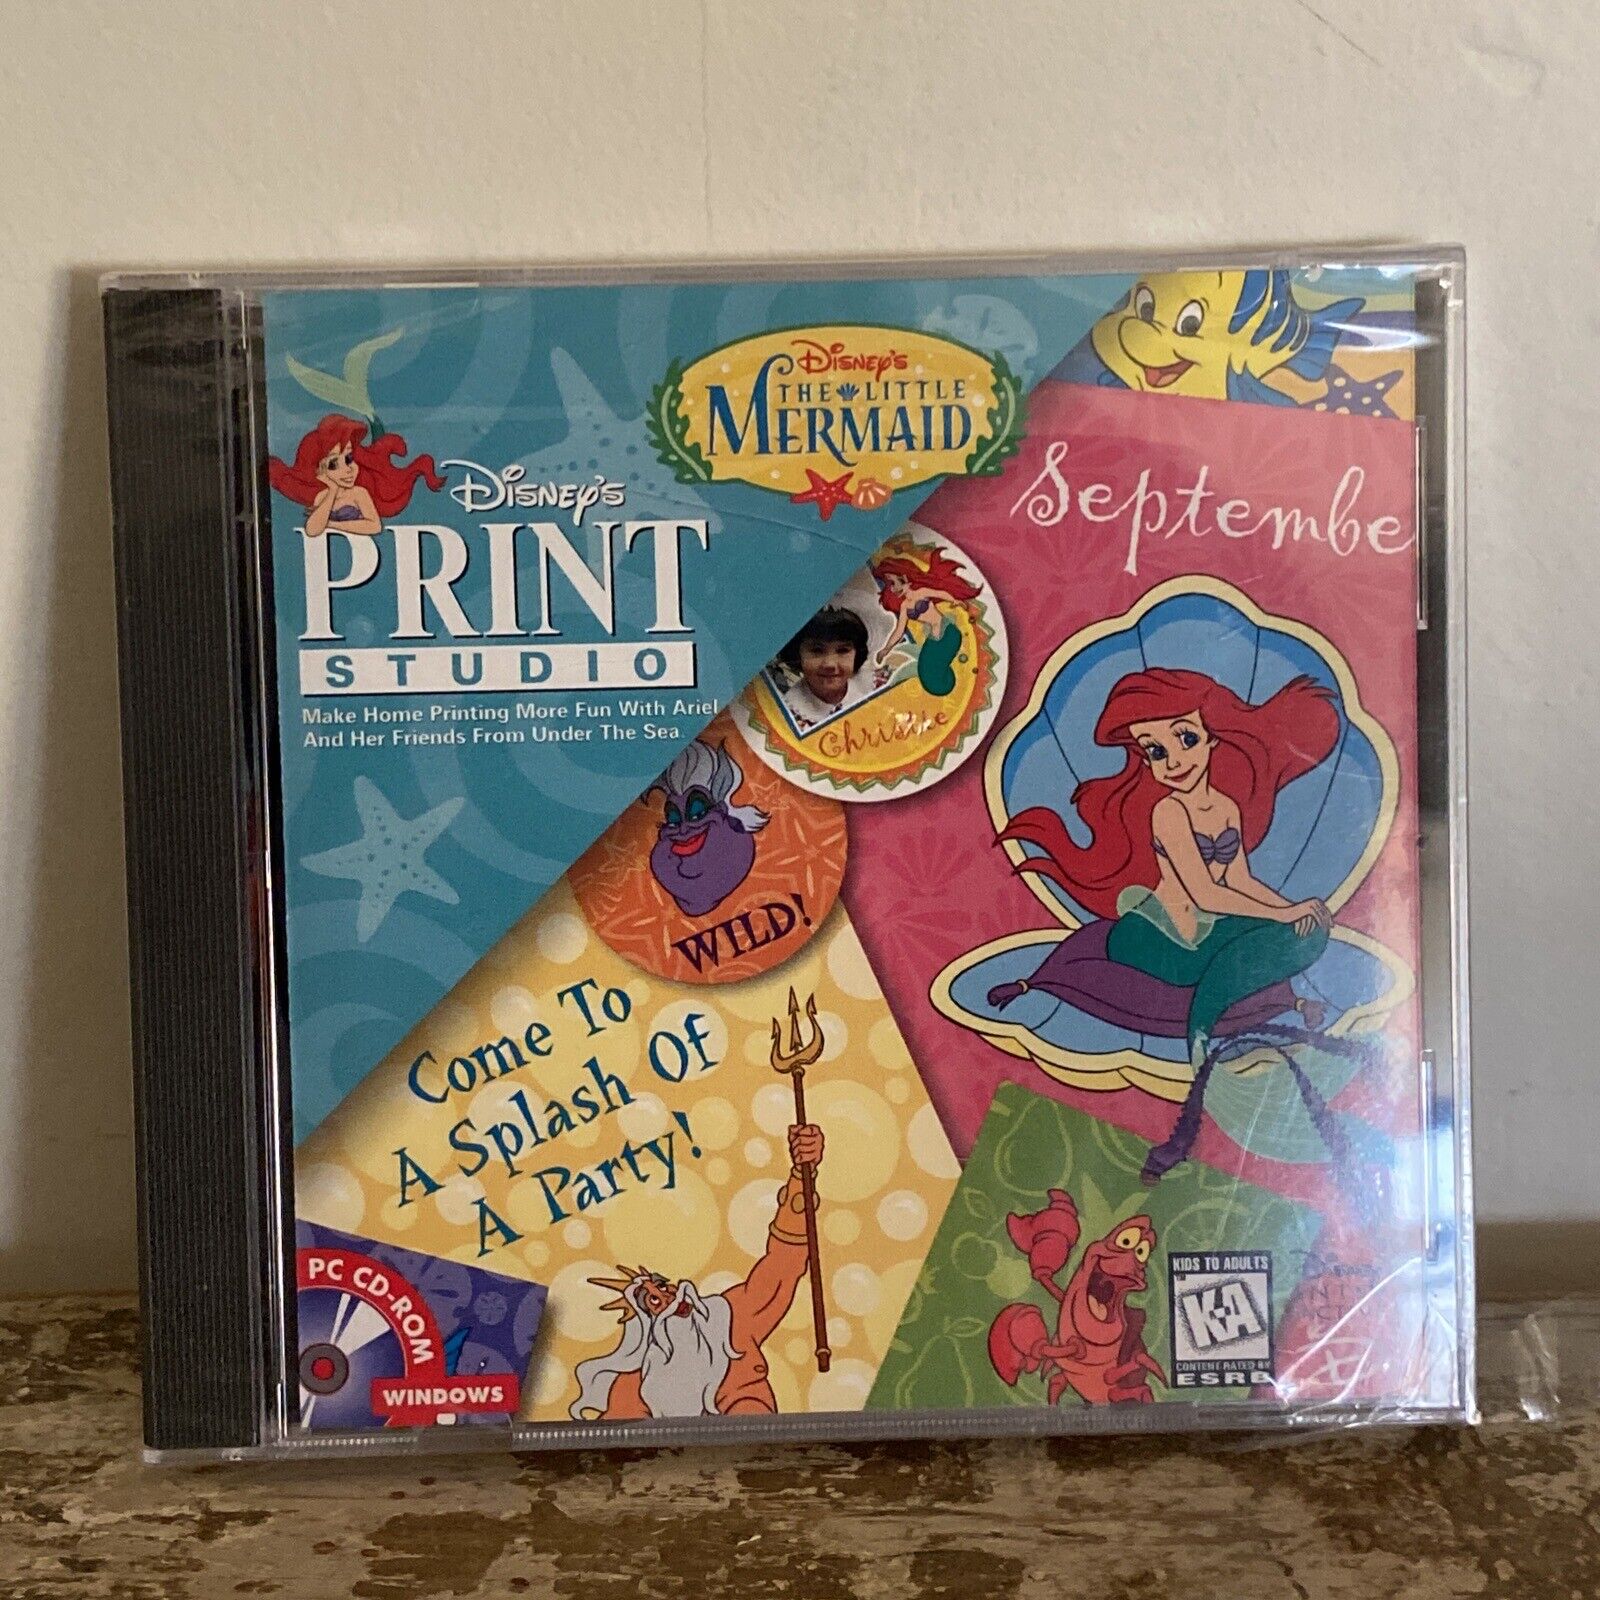 Disney's The Little Mermaid Print Studio PC CD Windows Create Graphics 1997